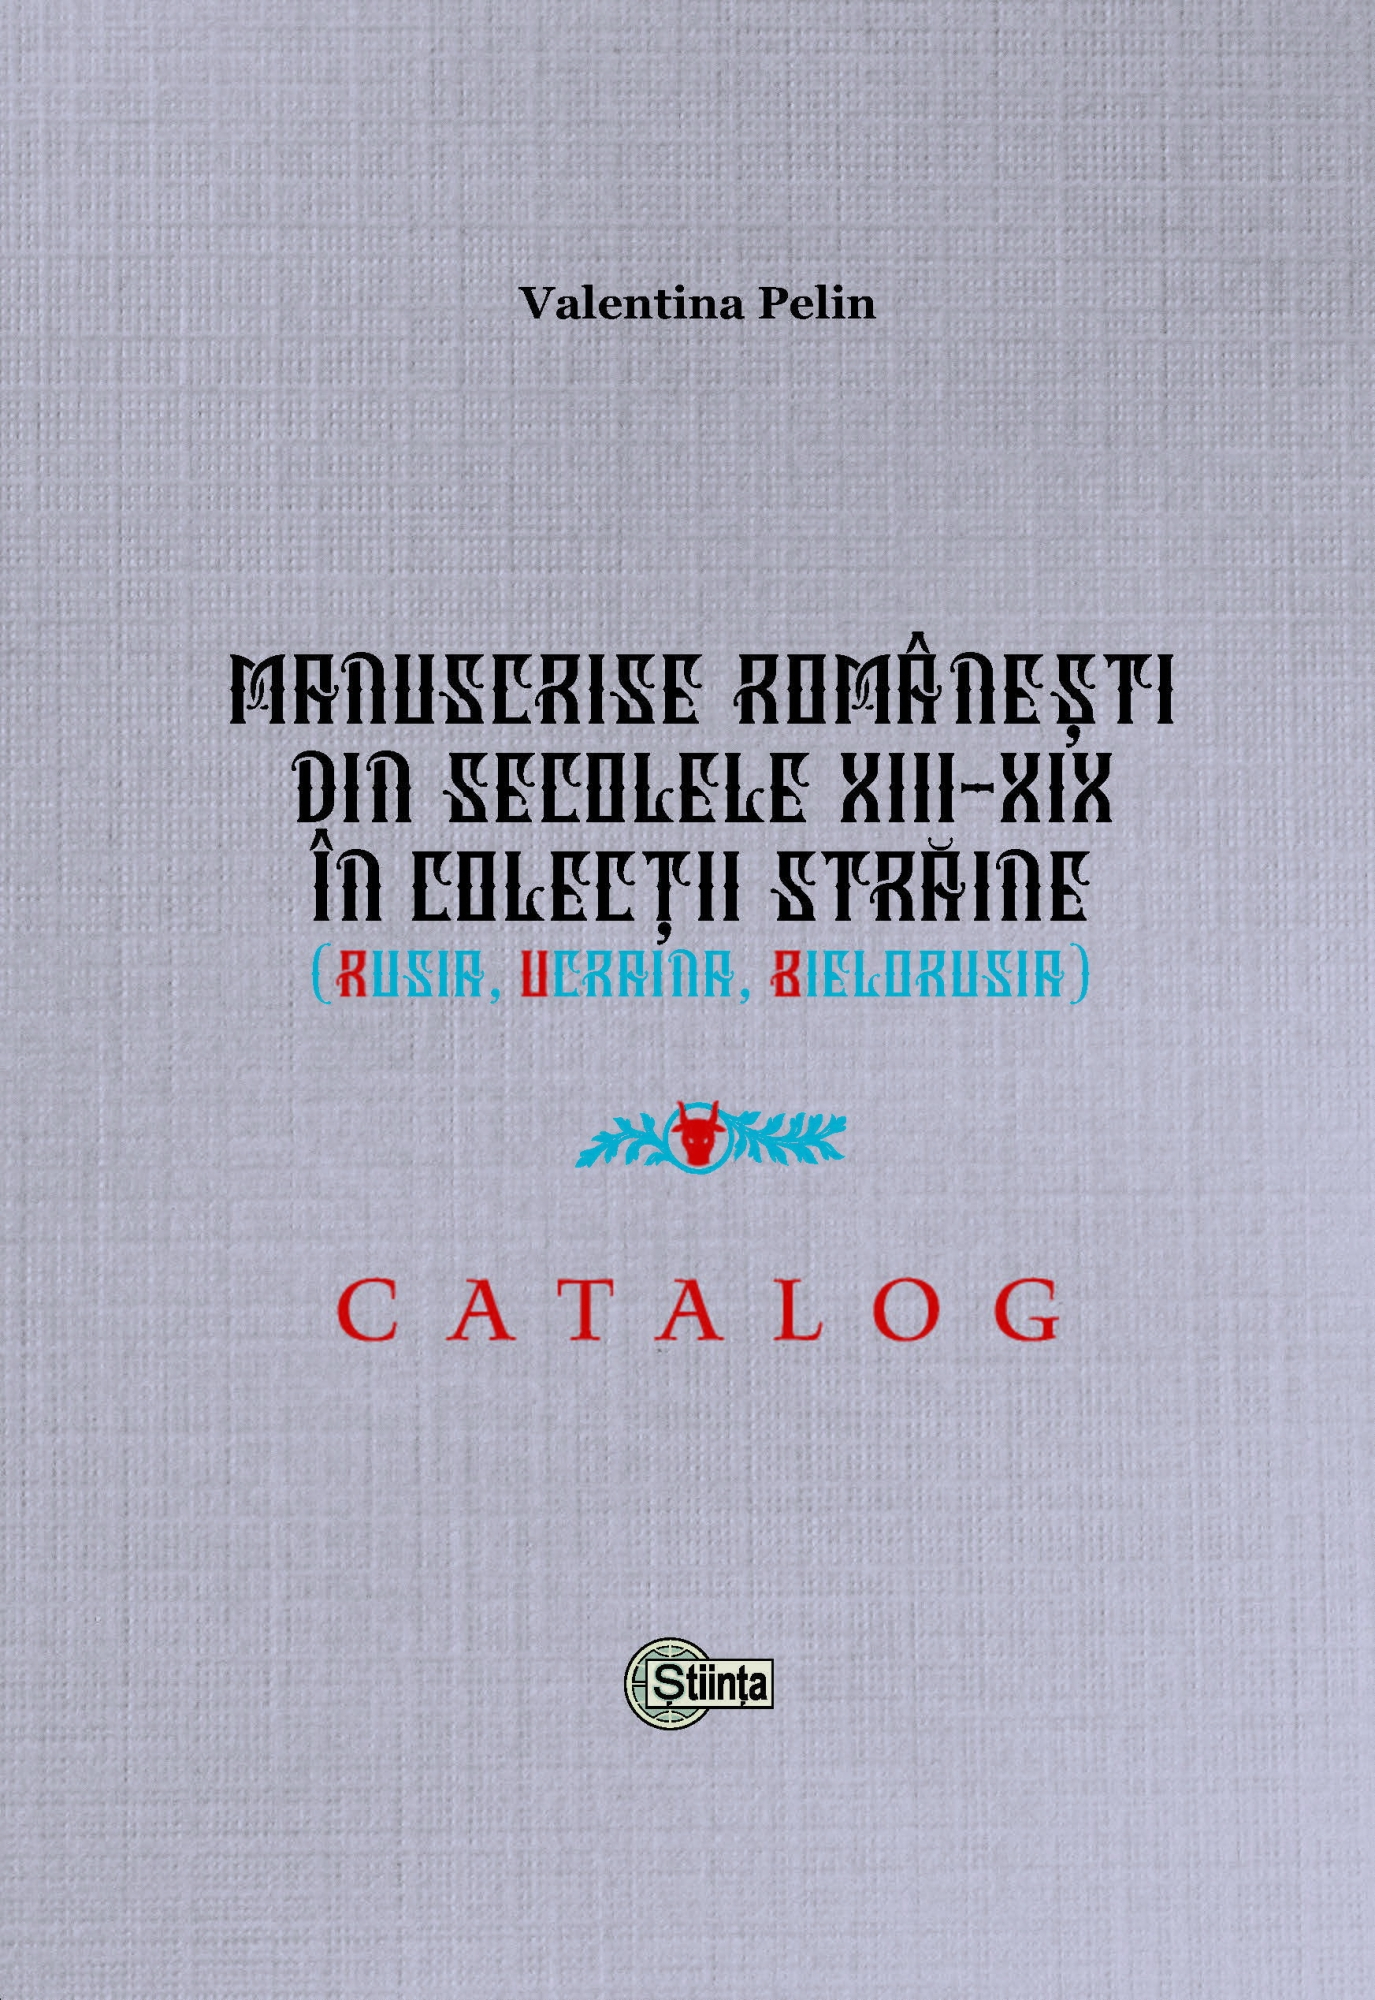 Manuscrise Romanesti din secolele XIII-XIX in colectii straine | Valentina Pelin carturesti.ro poza bestsellers.ro